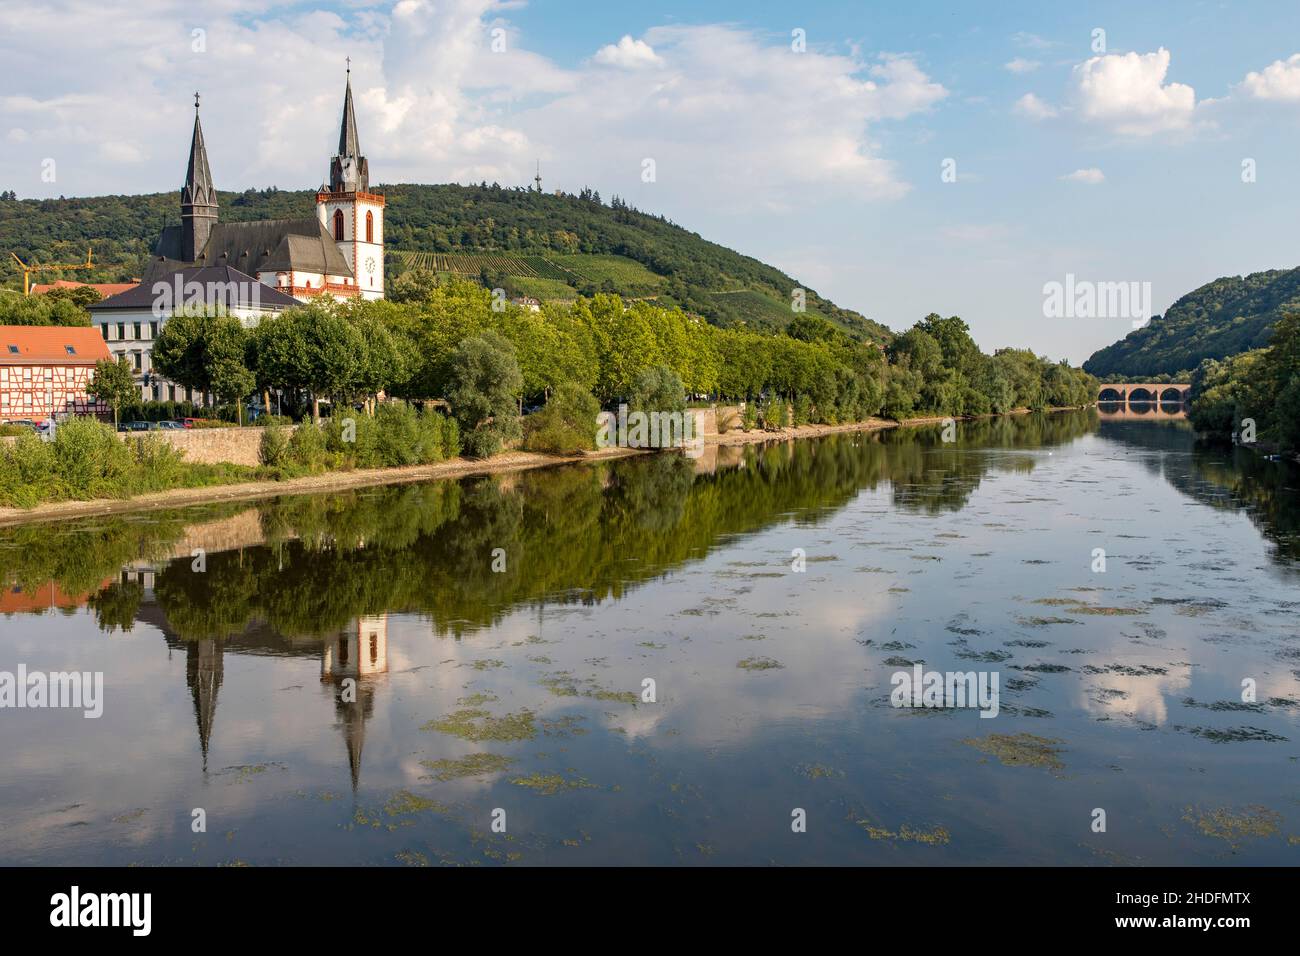 Bingen on the Rhine, Upper Middle Rhine Valley, UNESCO World Heritage Site, vineyards, the river Nahe, Bingen, Rhineland-Palatinate, Germany Stock Photo